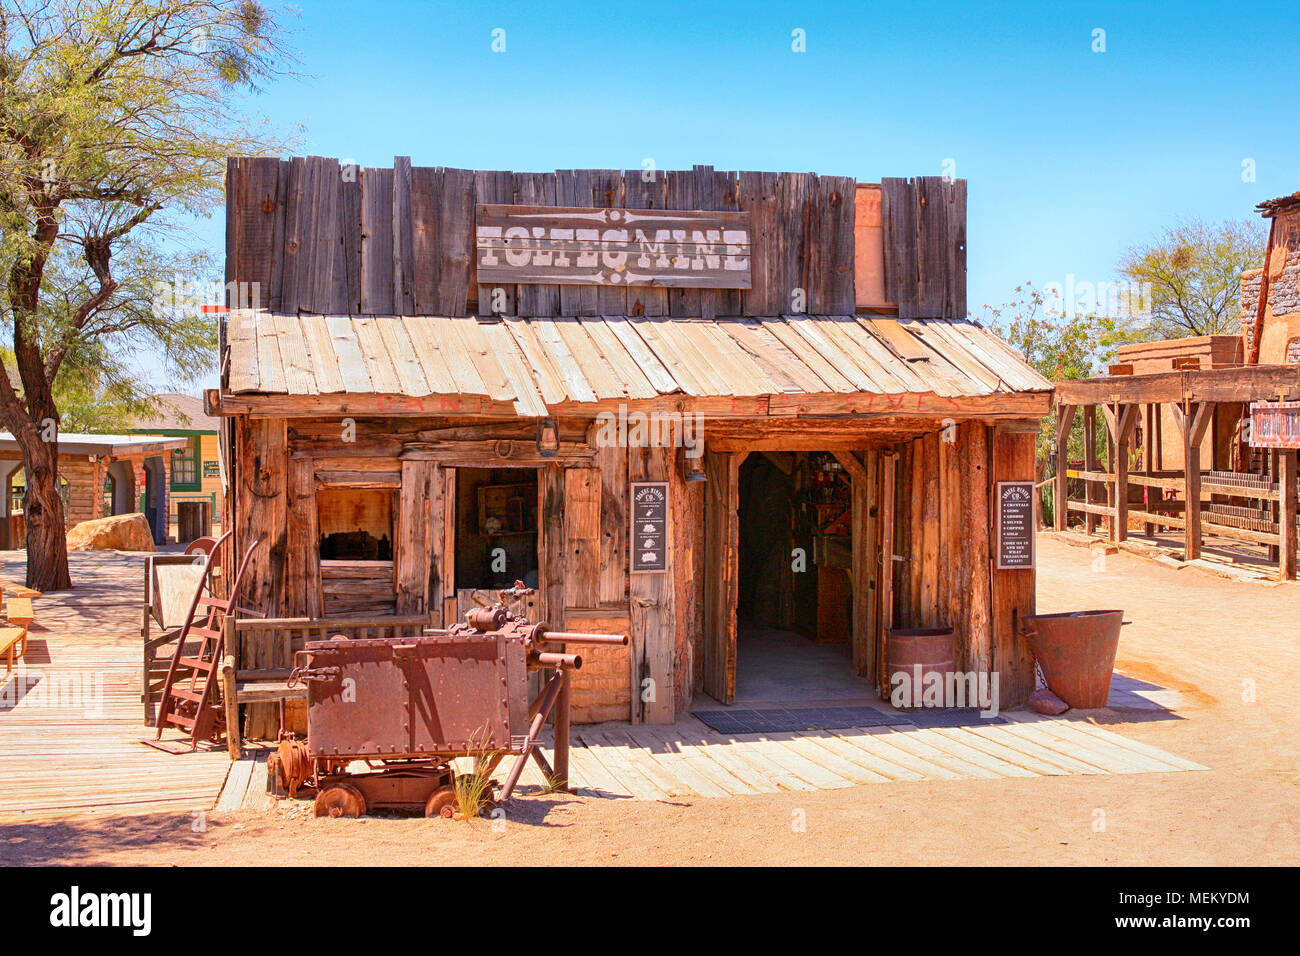 The Toltec Mine at the Old Tucson Film Studios amusement park in Arizona Stock Photo